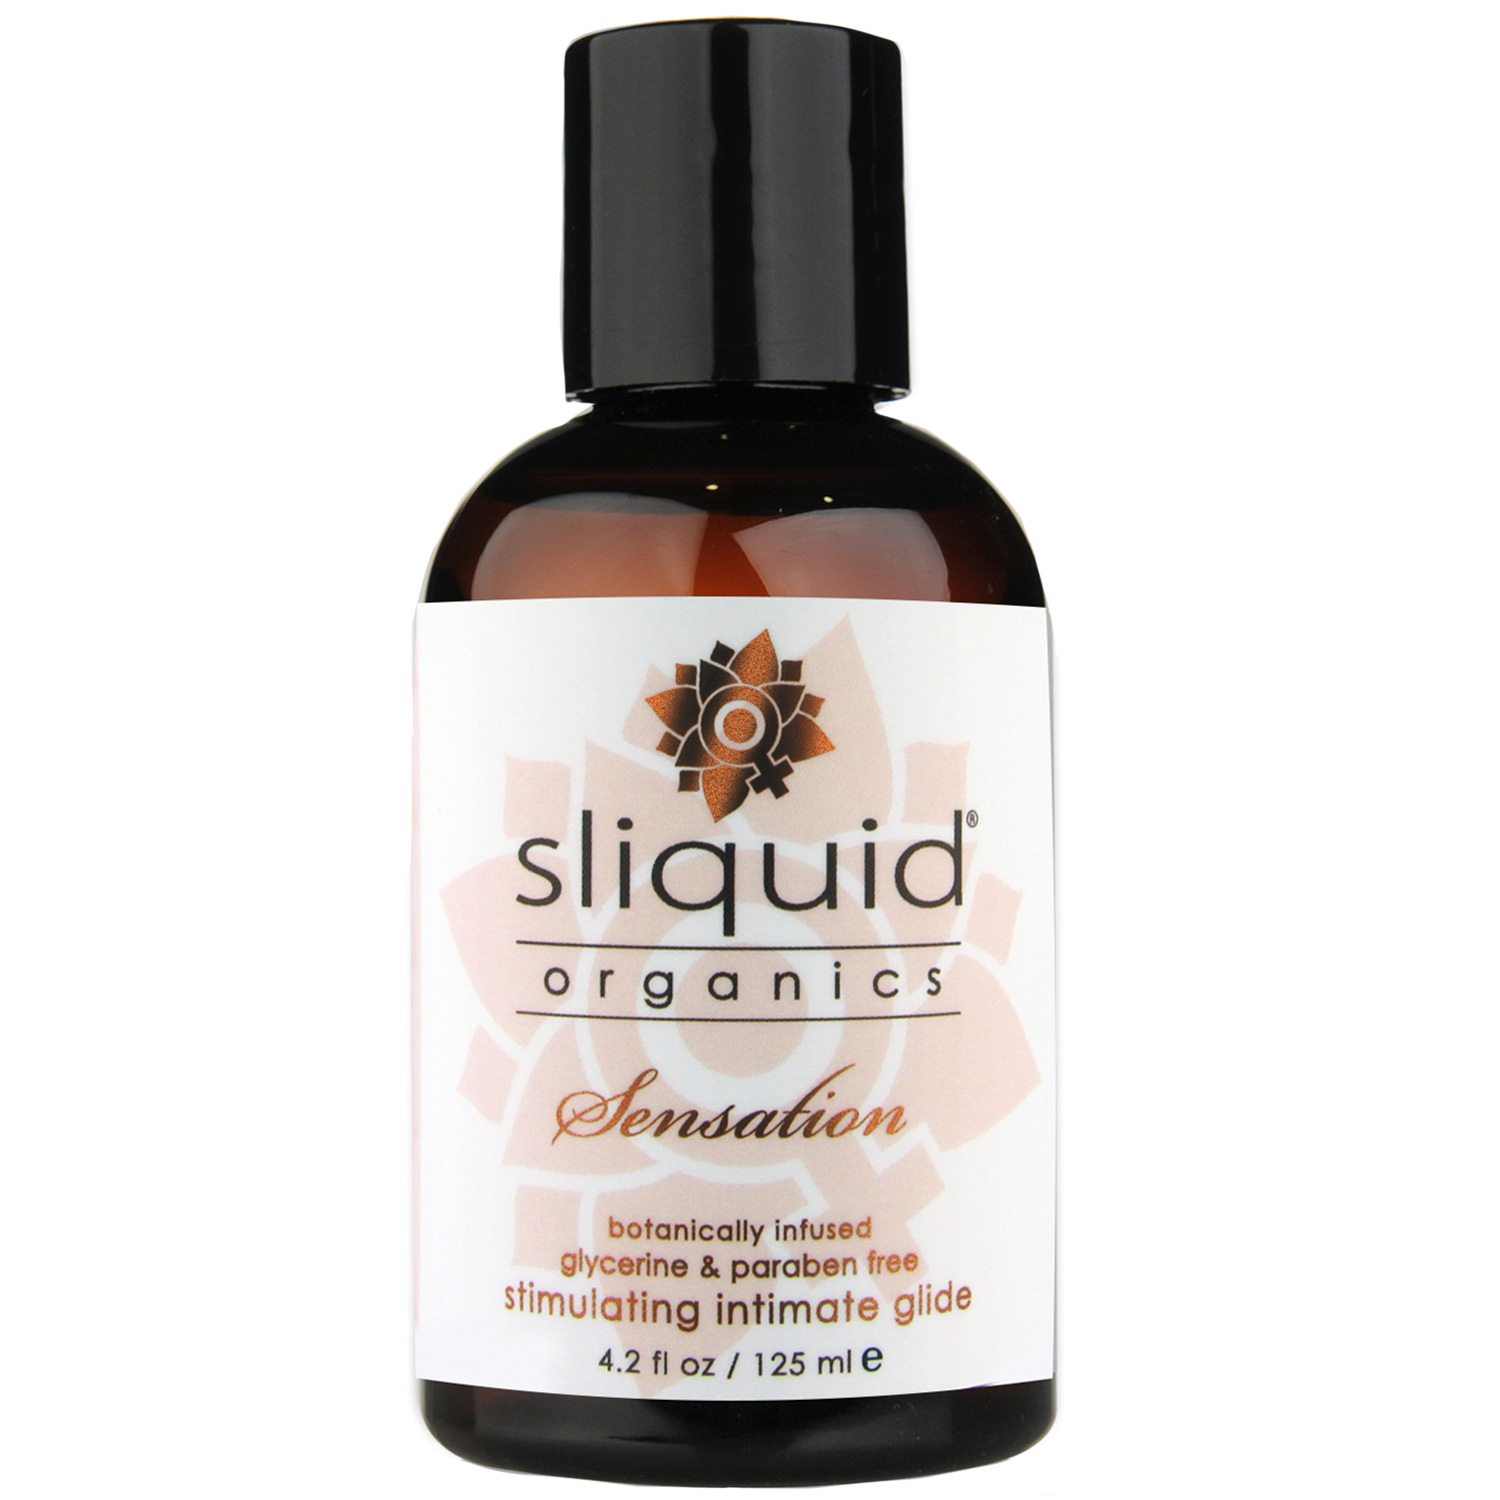 Sliquid Organic Sensations Glidecreme 125 ml - Clear thumbnail